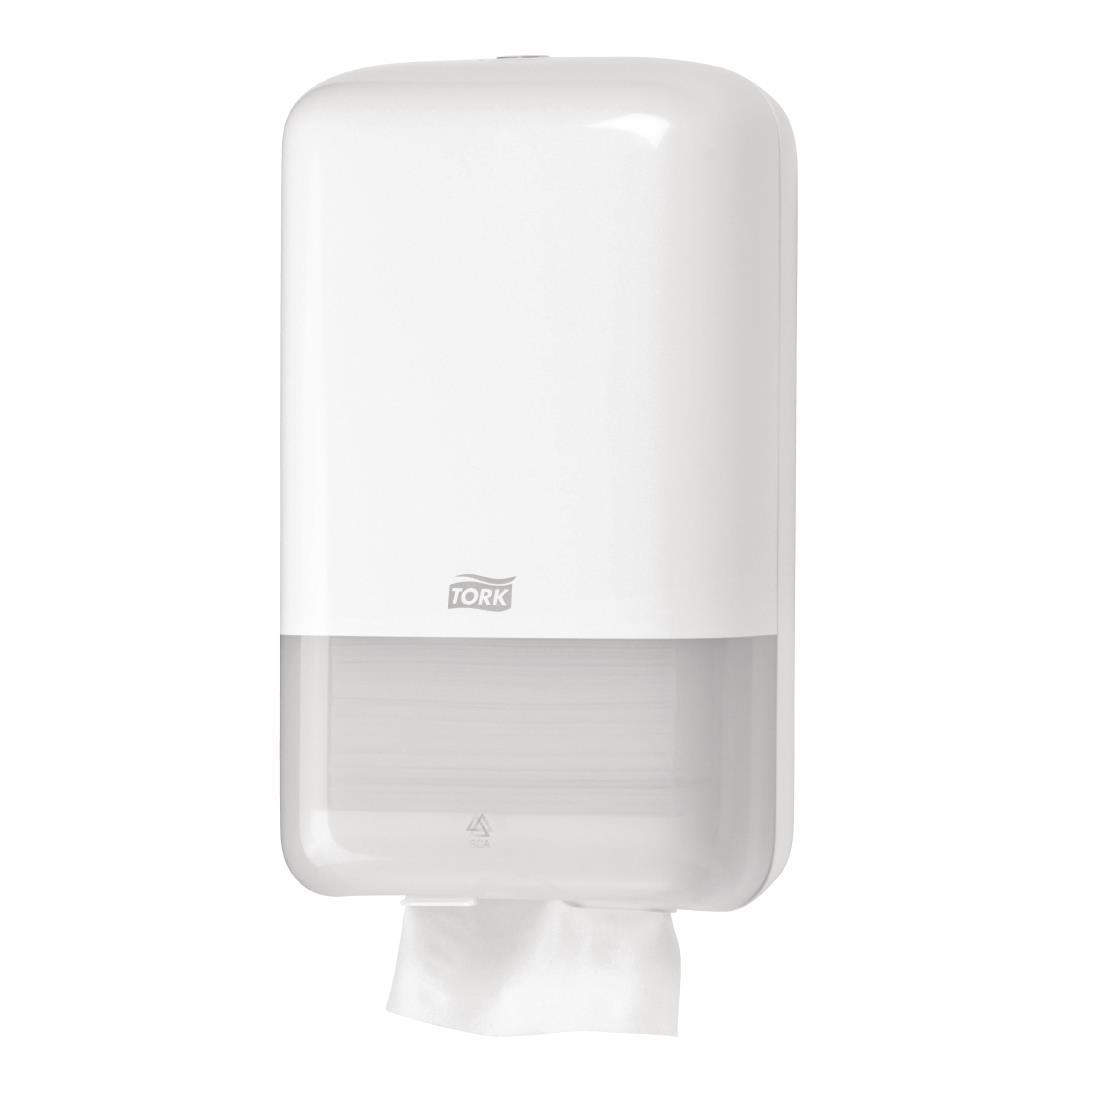 Y037 - Toilet Paper Dispenser